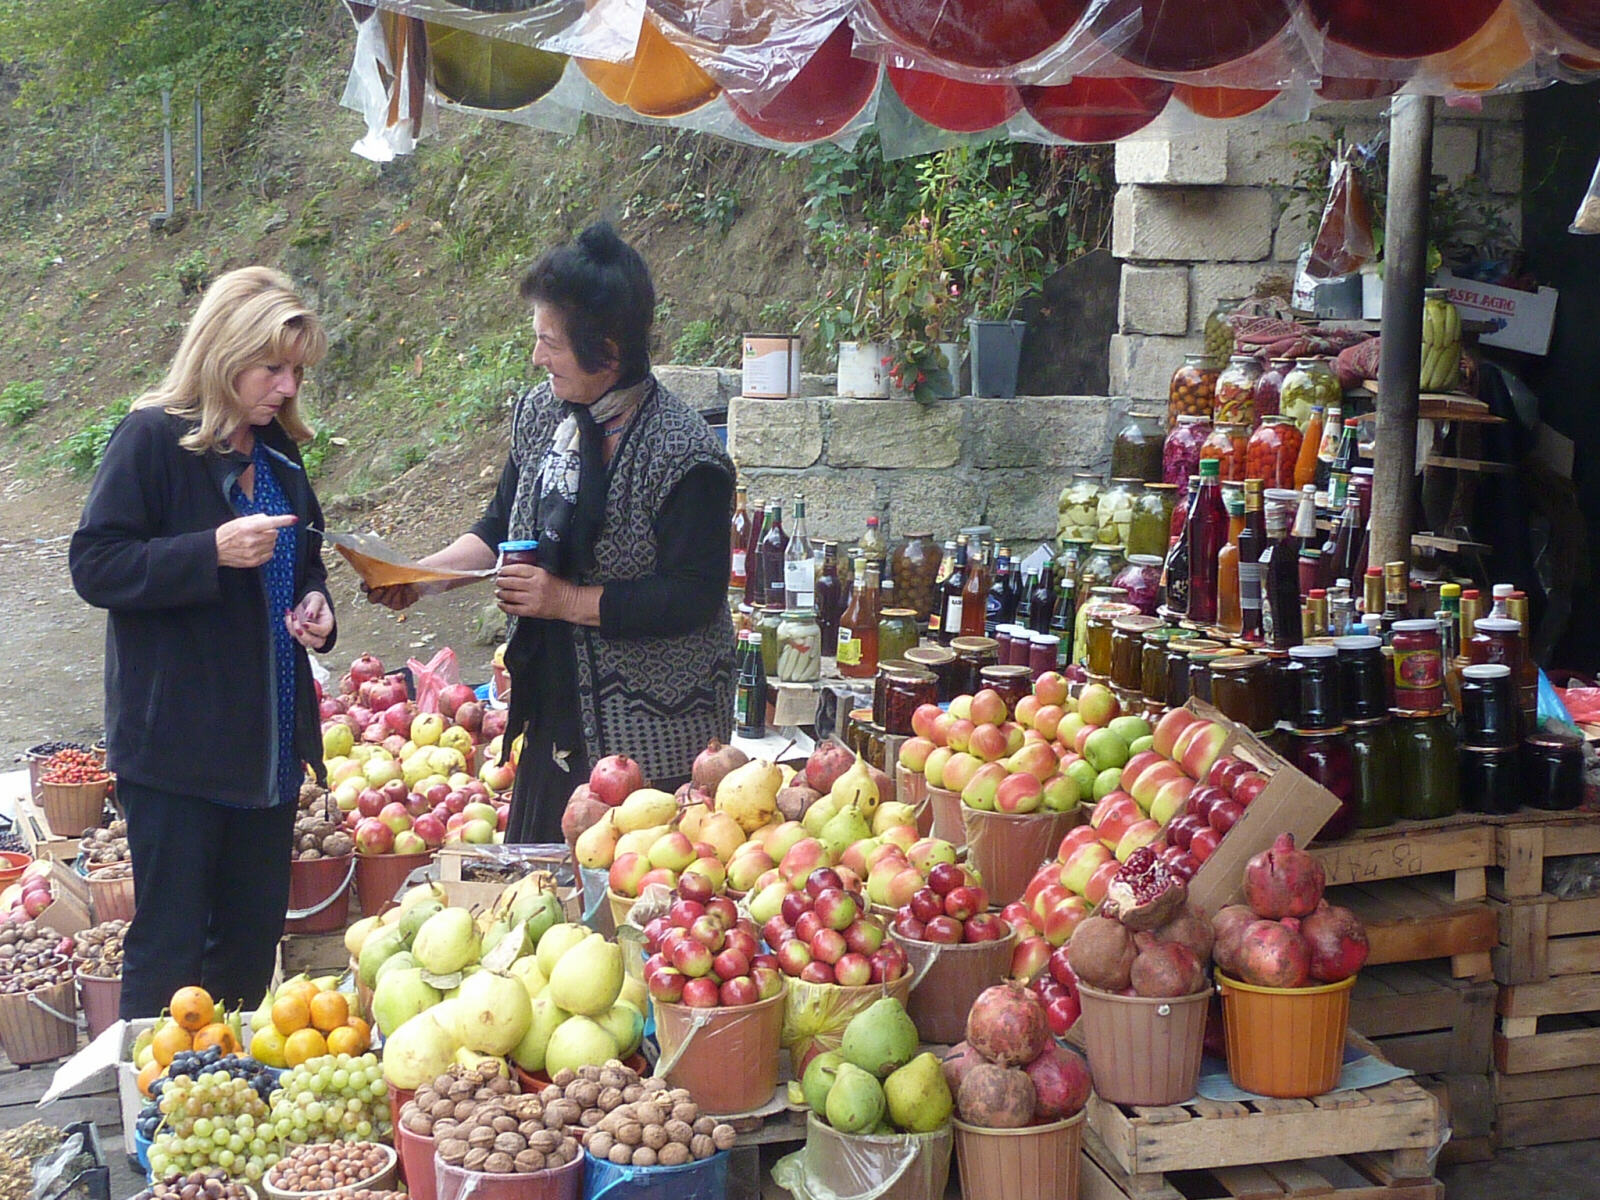 A fruit stall by the road from Sheki to Baku, Azerbaijan